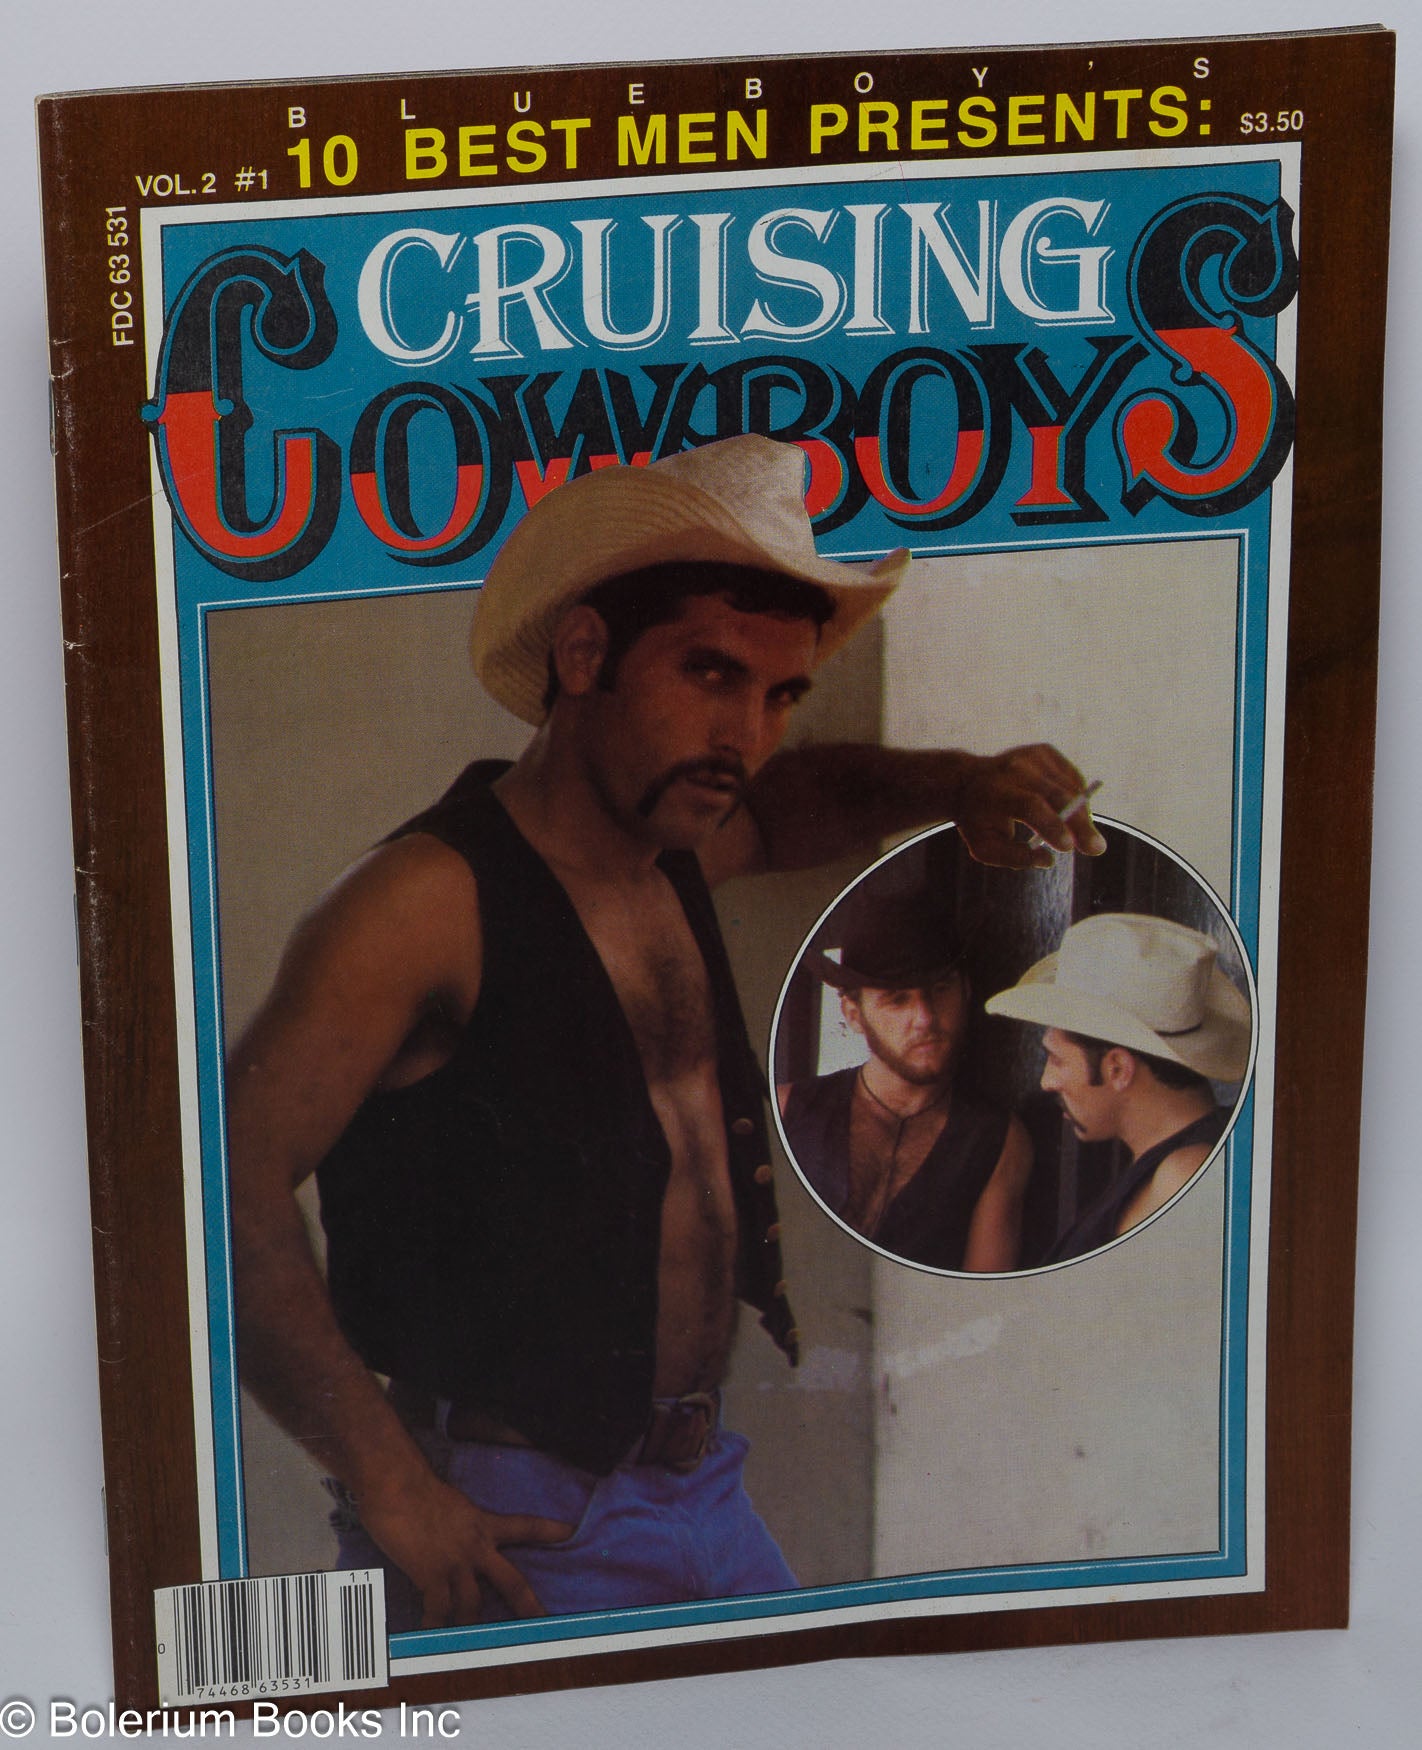 Blueboy's 10 Best Men presents: Cruising Cowboys; vol. 2, #1